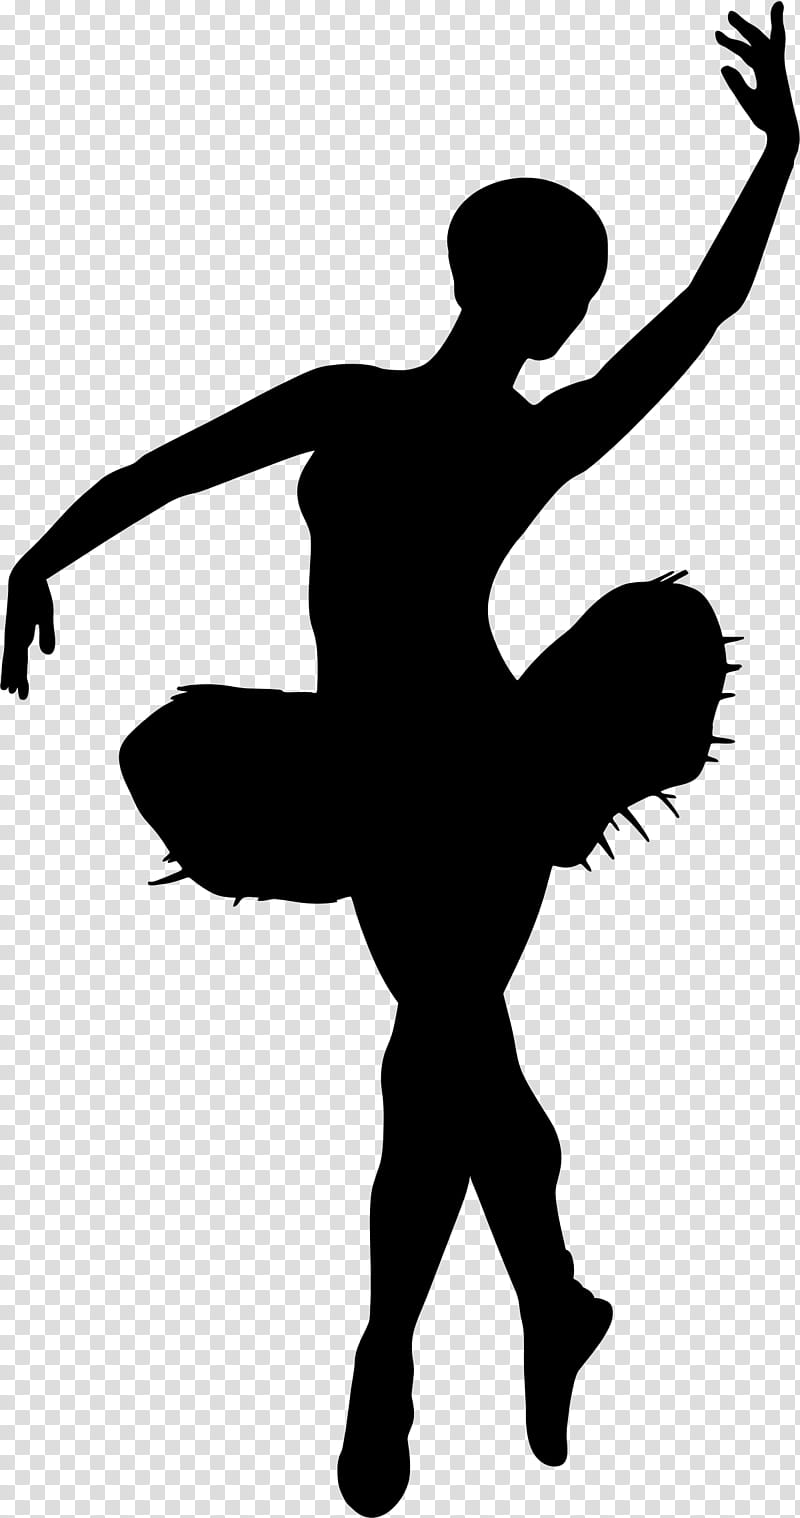 Dancer Silhouette, Ballet Class, Ballet Dancer, Positions Of The Feet In Ballet, Ballet Shoe, Jazz Shoe, Gaynor Minden, Athletic Dance Move transparent background PNG clipart